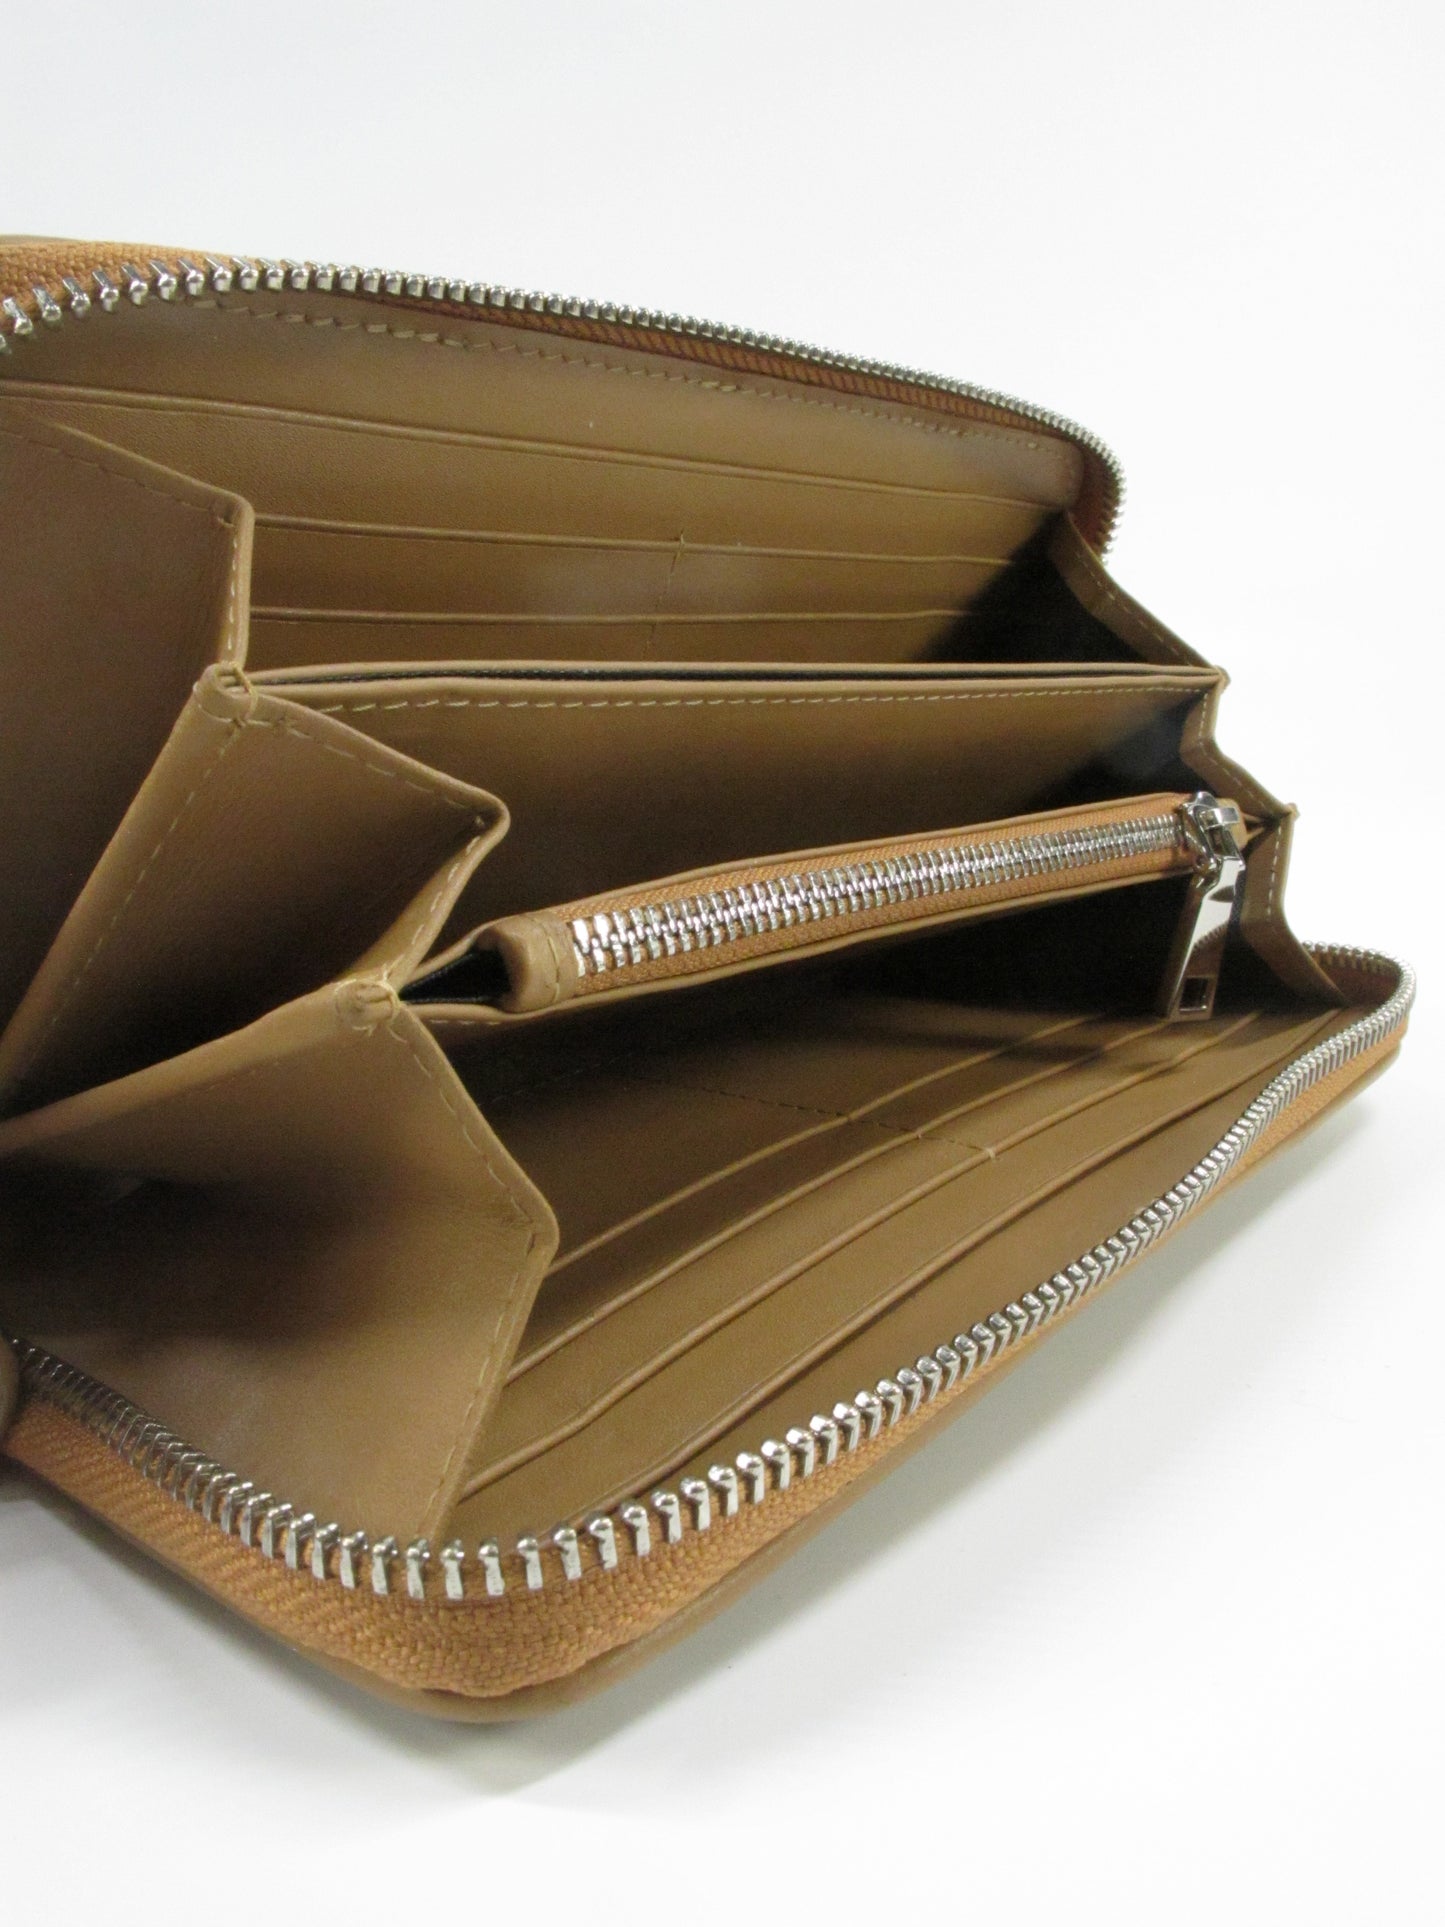 Genuine Polished Stingray Skin Leather Zip Around Clutch Wallet Purse